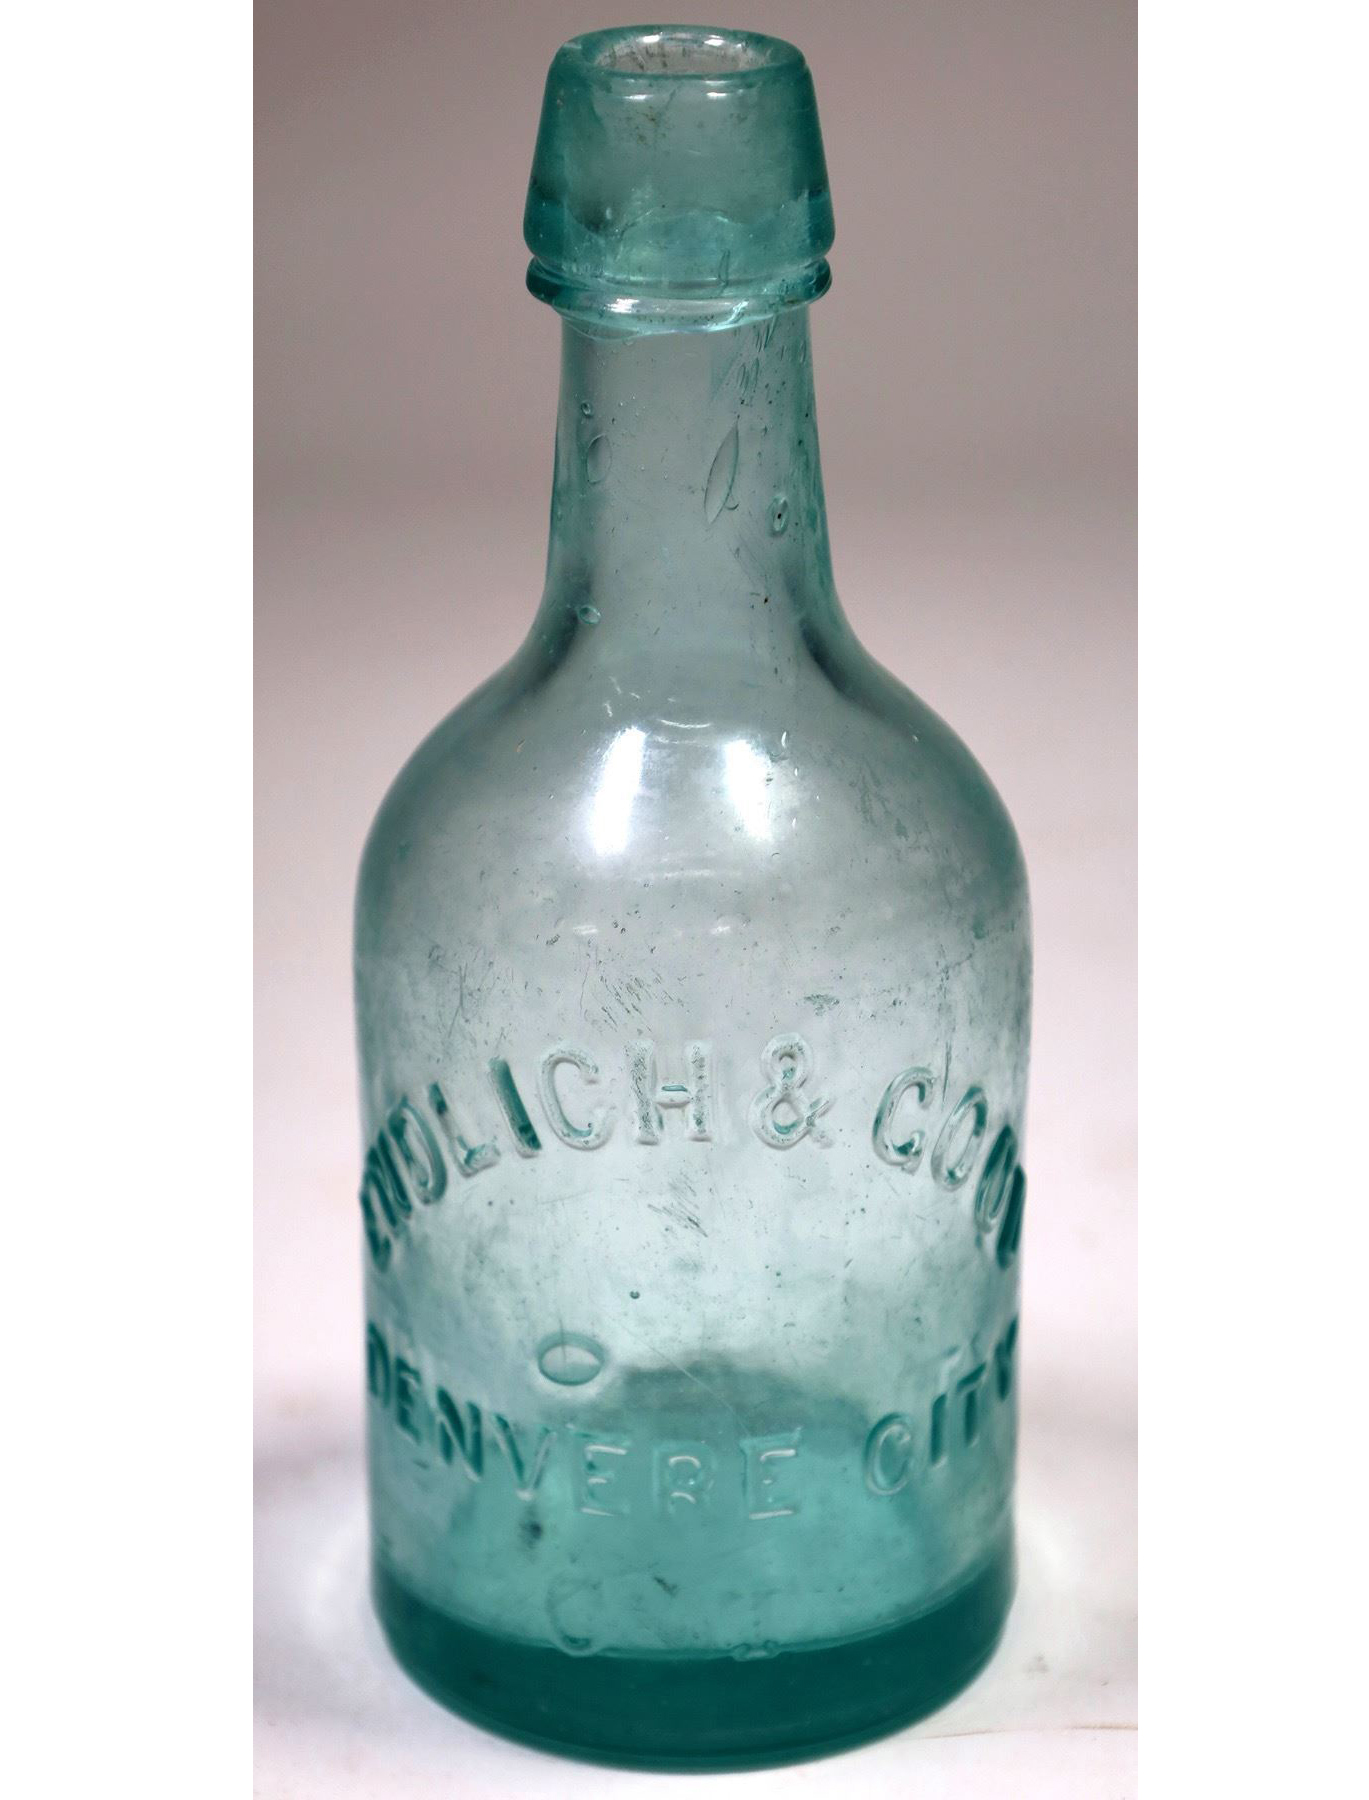 Circa 1861-1864 Endlich & Good squat-shaped beer bottle, $7,187